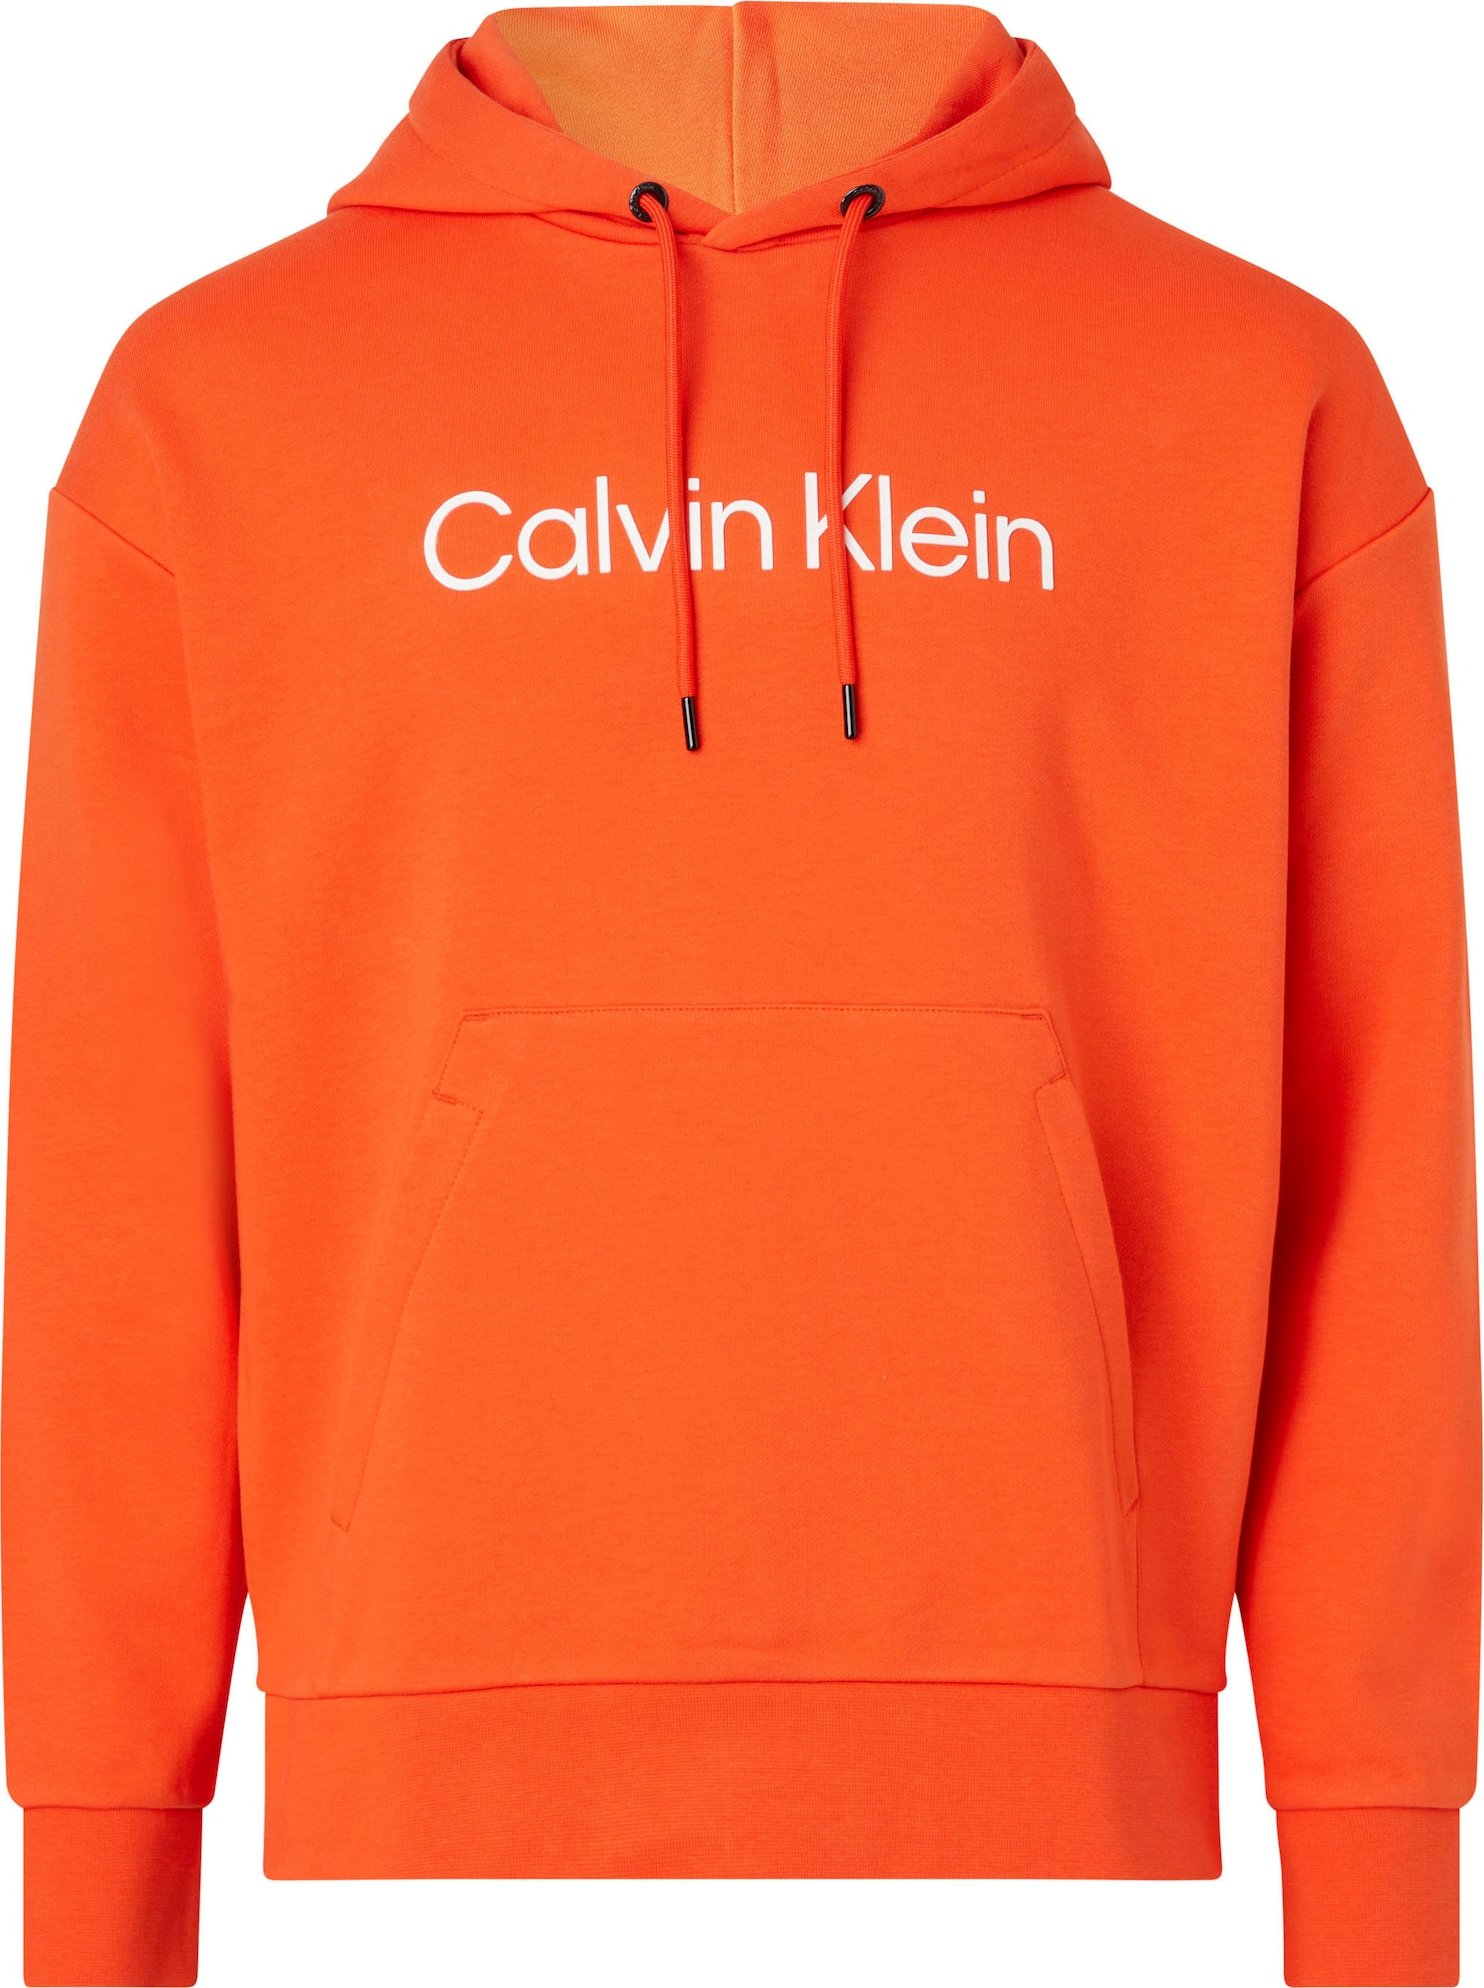 Mikina Calvin Klein oranžová / bílá